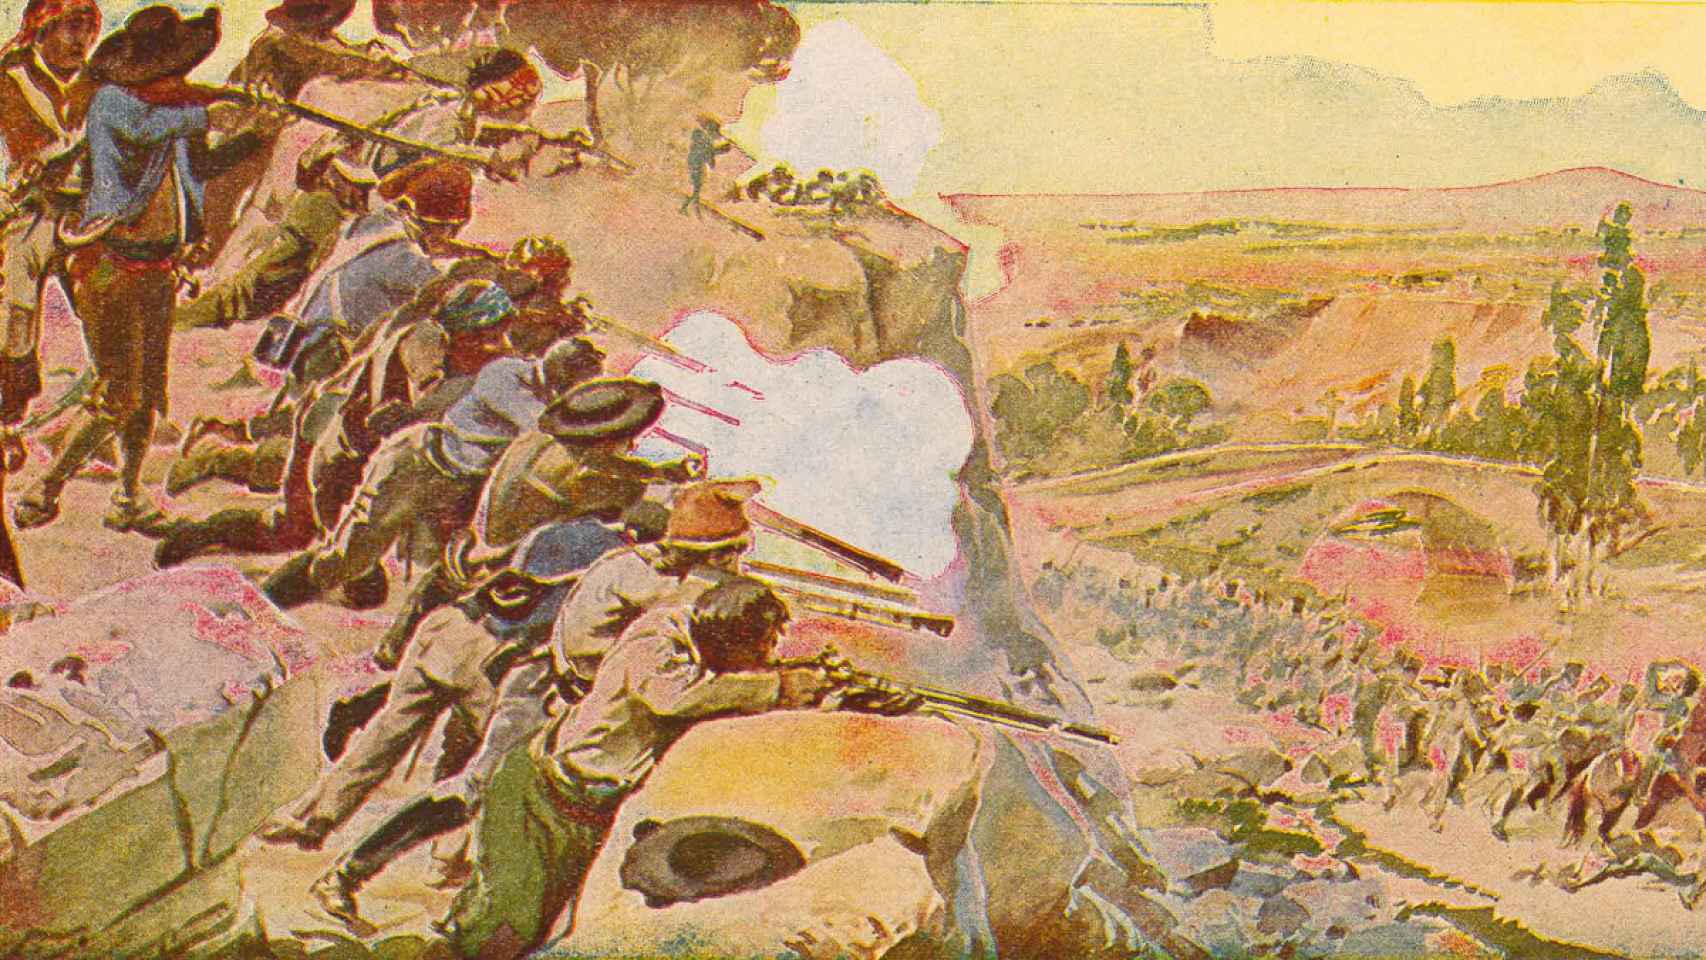 Guerrillas atacando a una columna de tropas francesas.